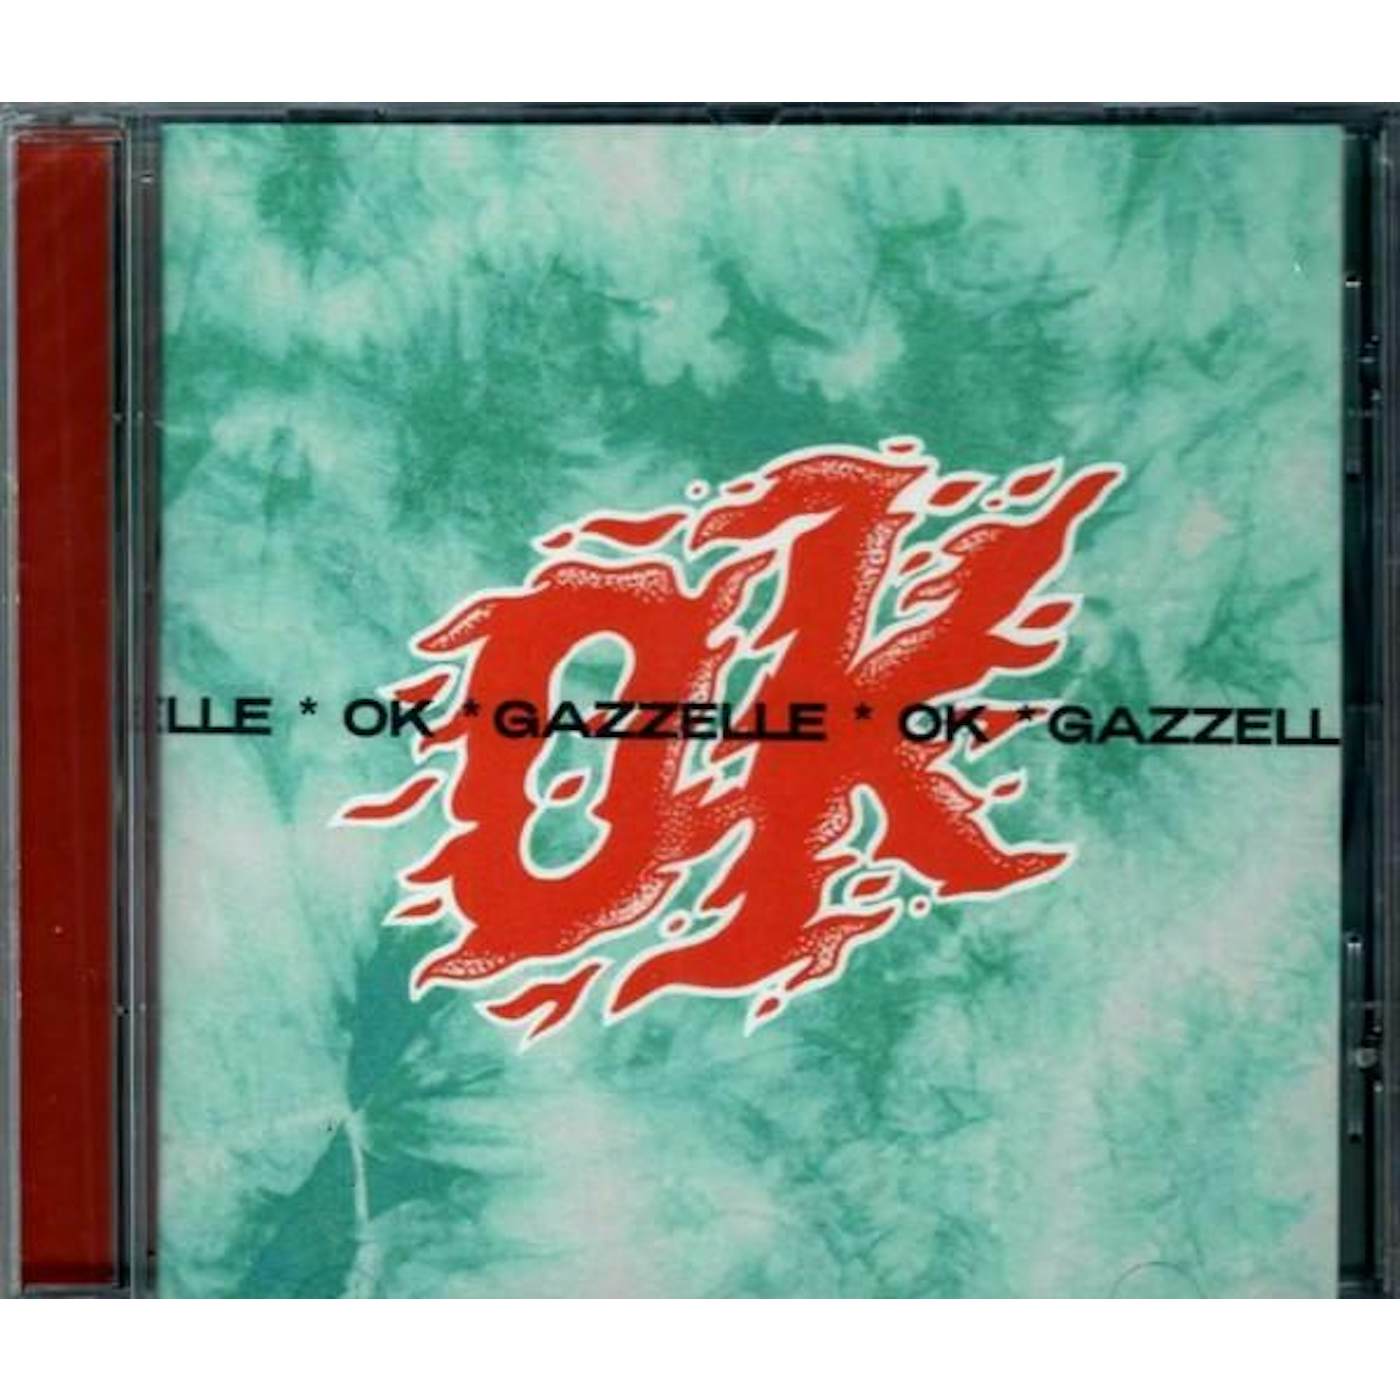 Gazzelle OK CD